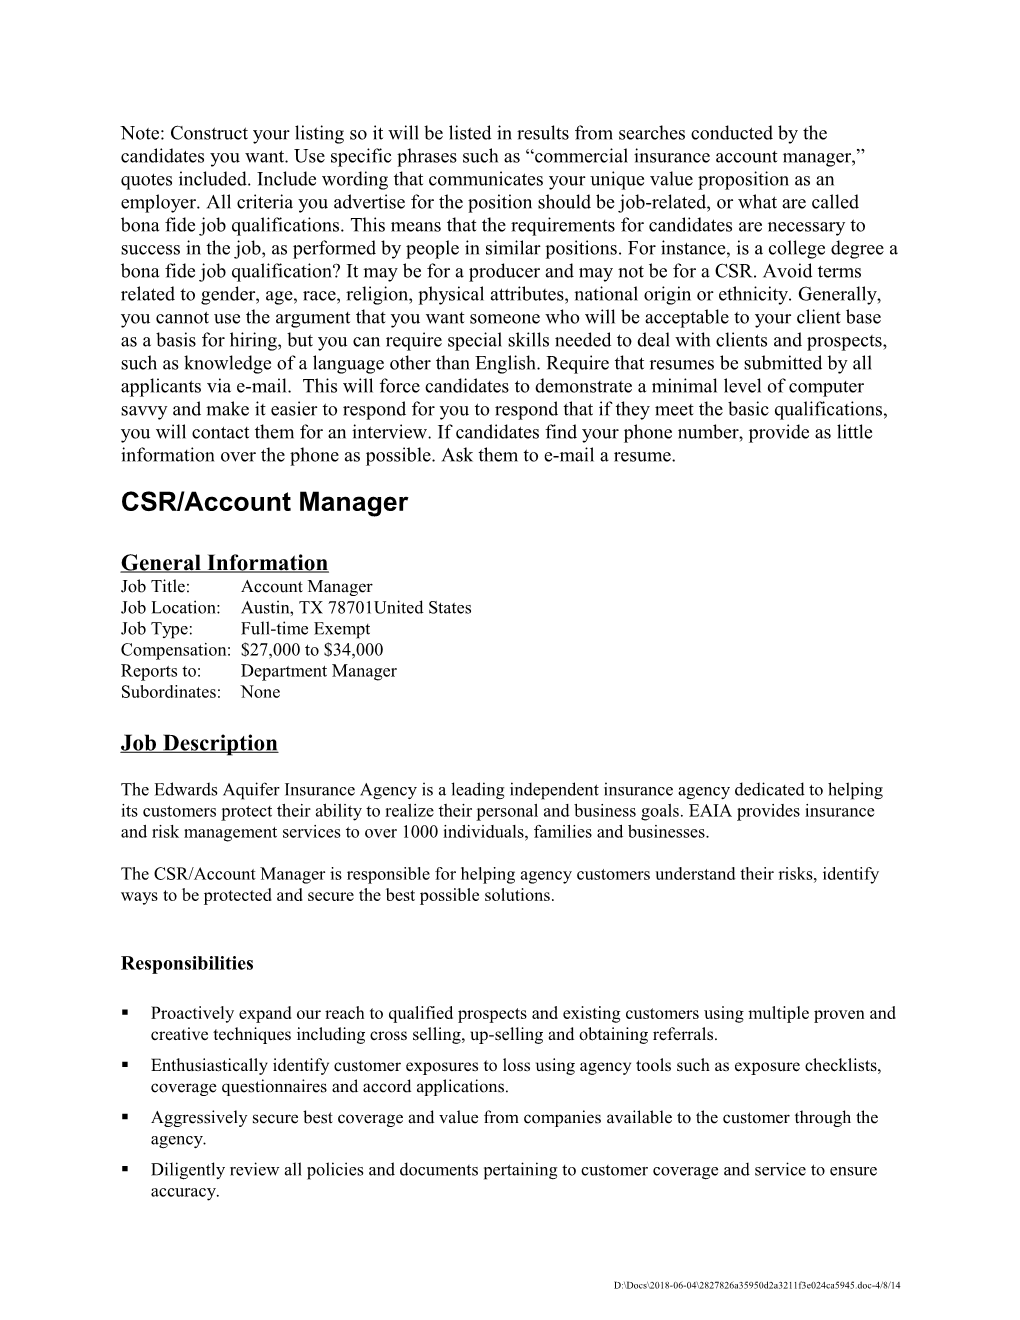 Sample Job Description - CSR Or Account Manager